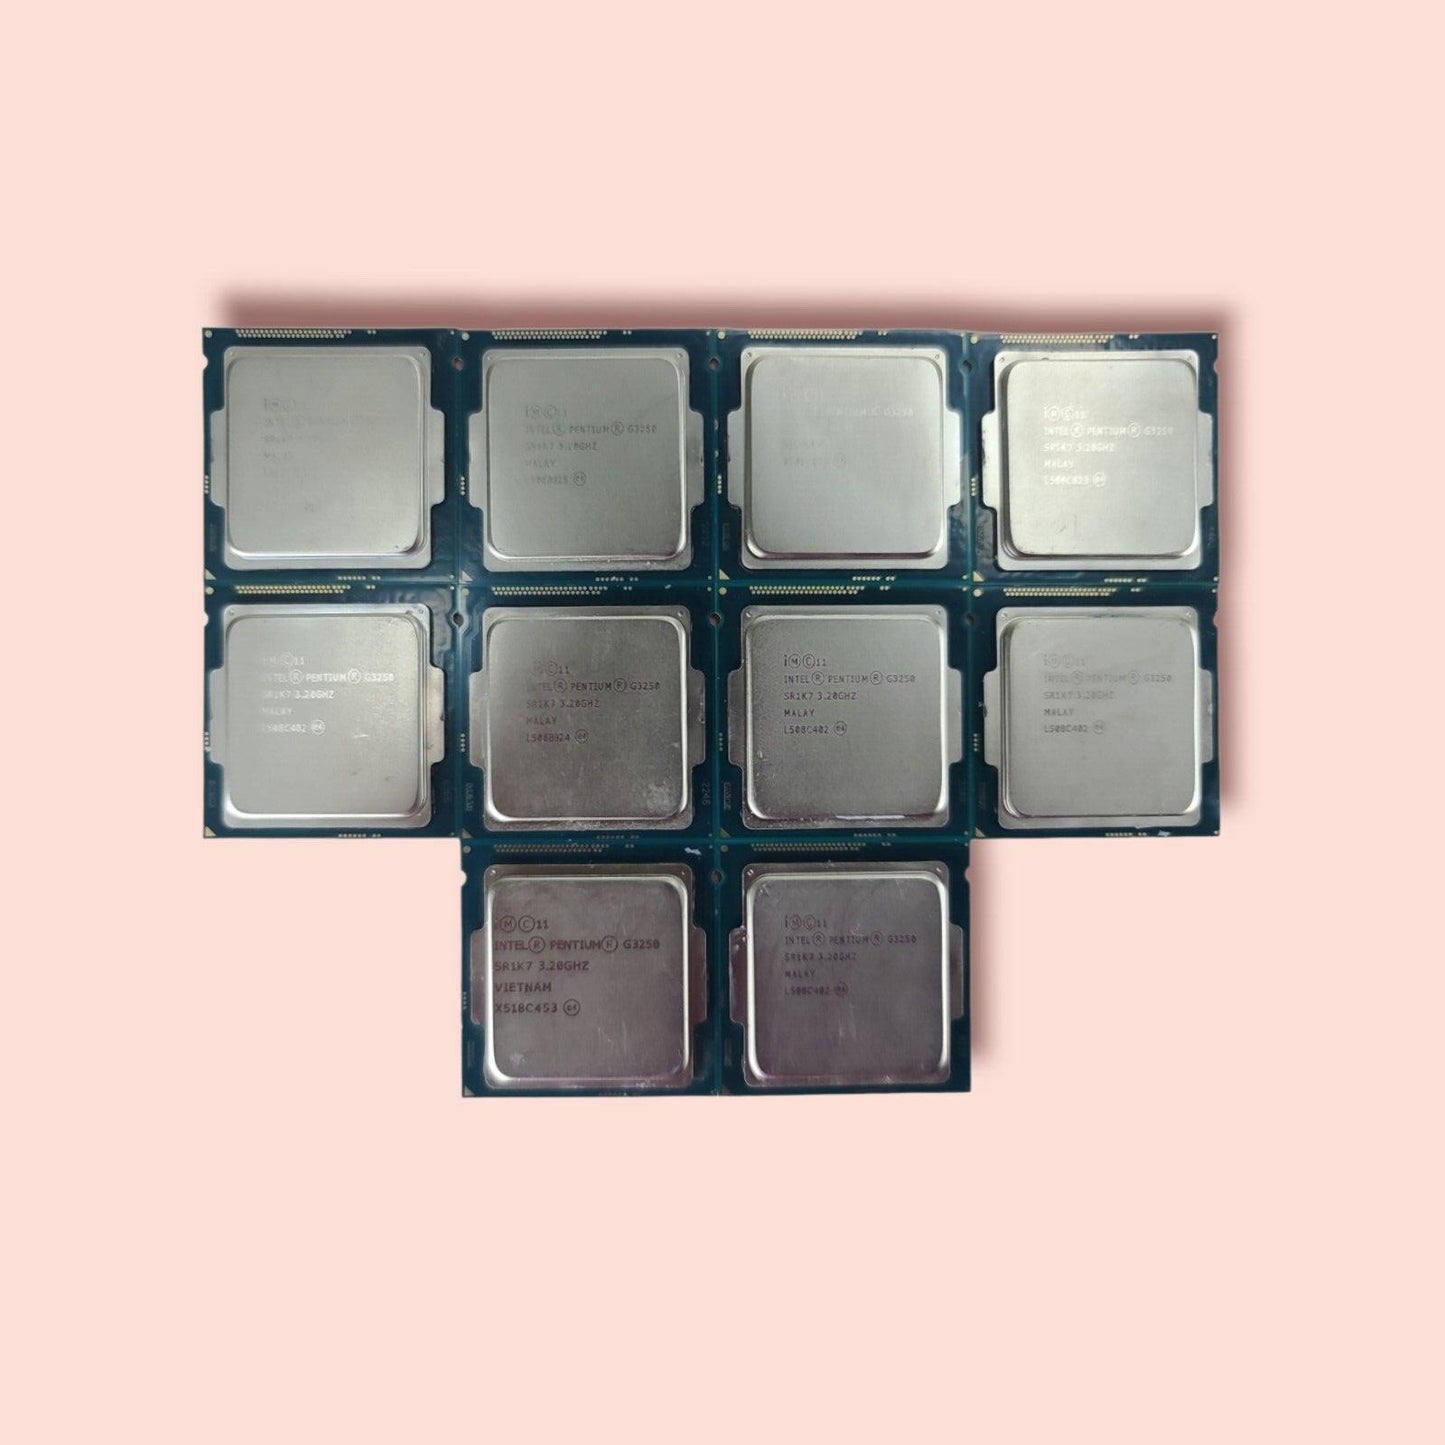 Lot of 10. Intel Pentium G3250 SR1K7 3.20GHz Dual-Core LGA 1150 Core Processor